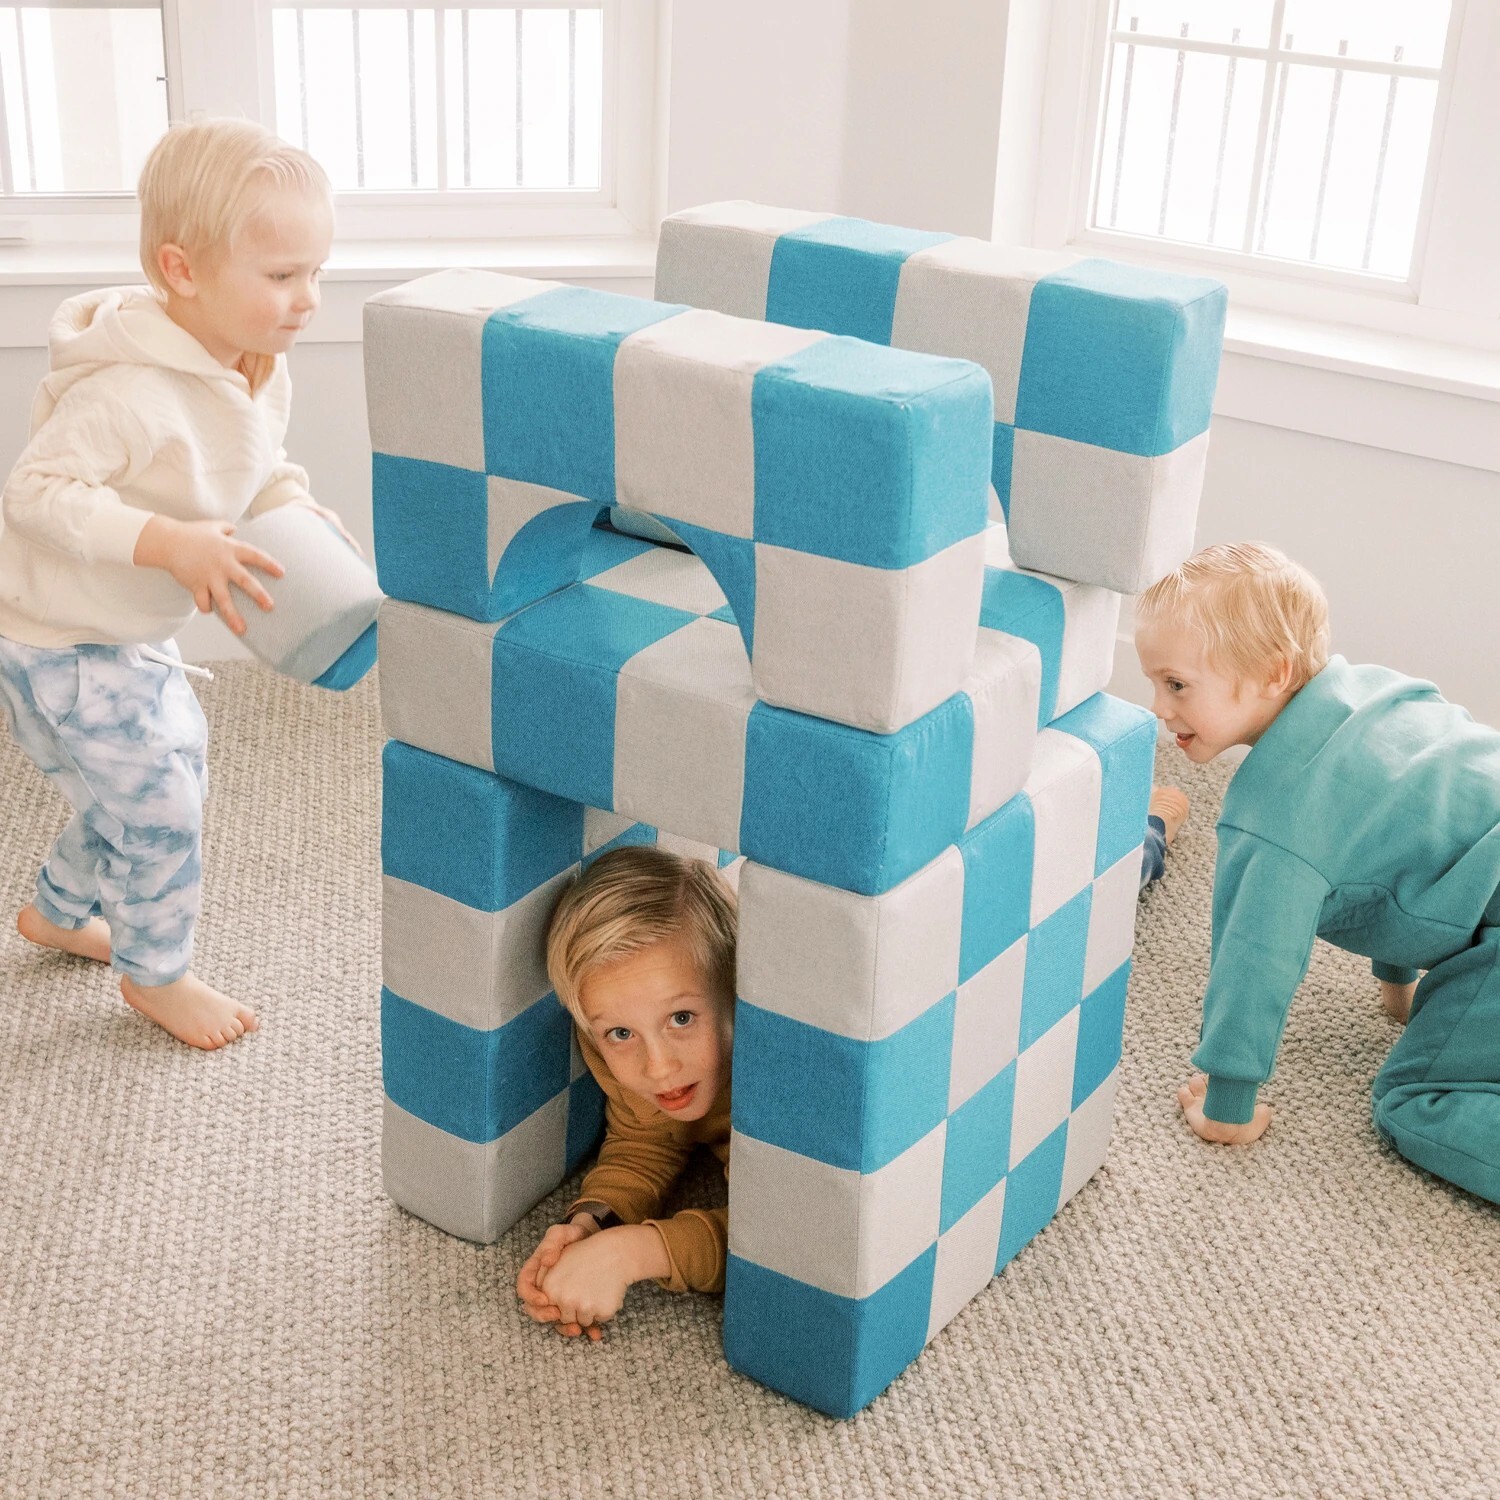 Magnetic Fun Building Block Toys for Children